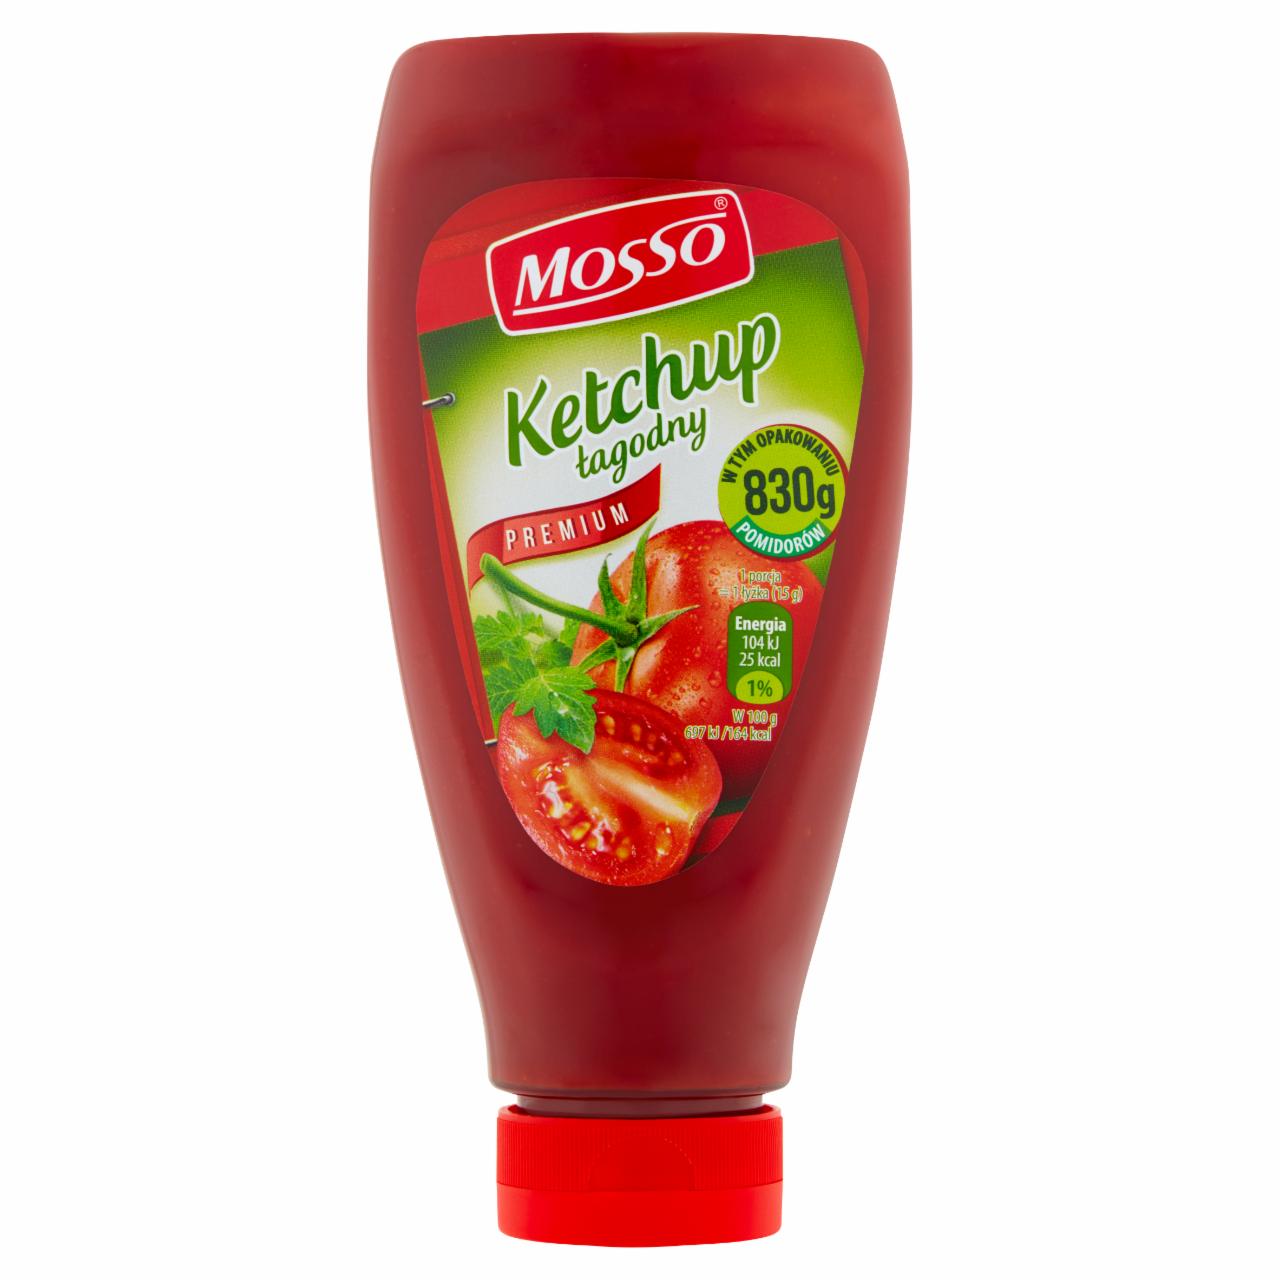 Zdjęcia - Mosso Ketchup Premium łagodny 350 g